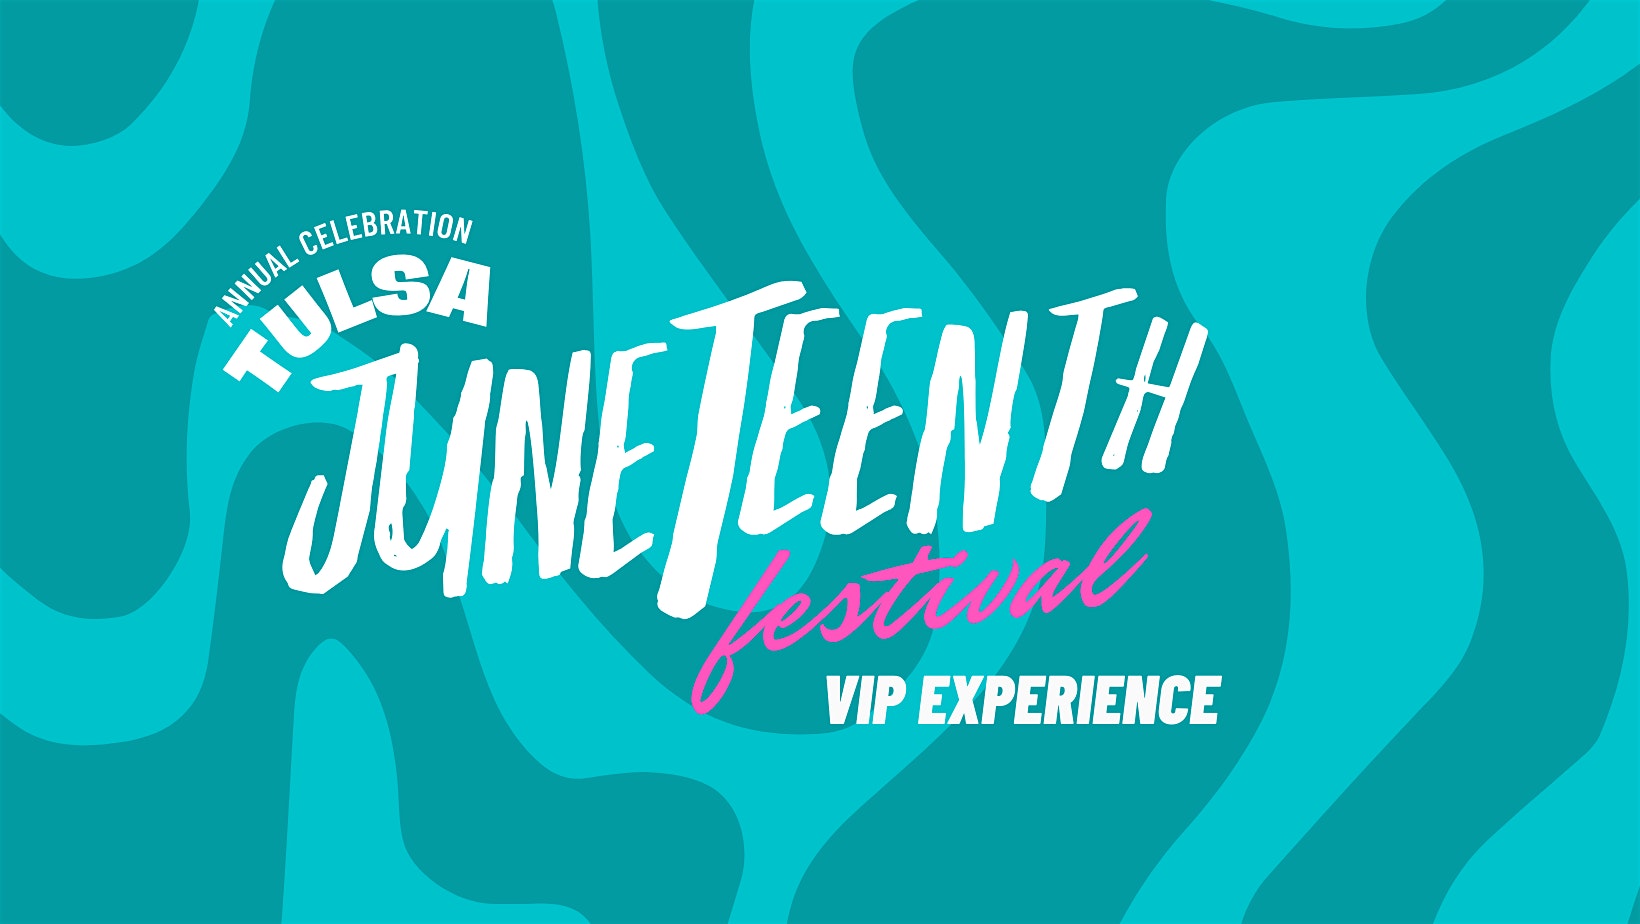 Tulsa Juneteenth Festival VIP Experience